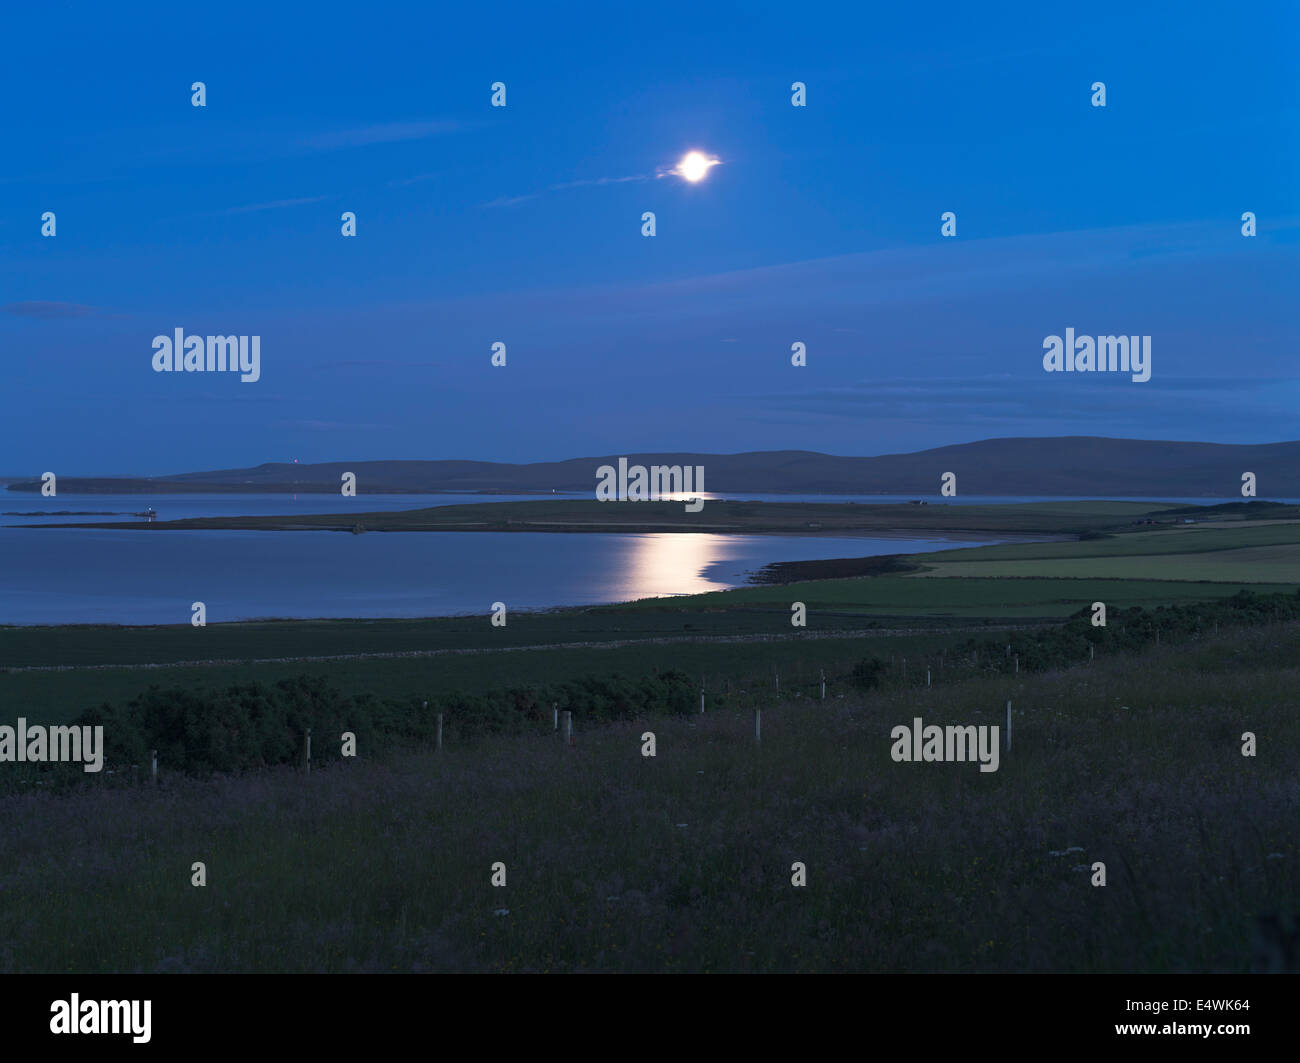 dh Scapa Flow ORPHIR ORKNEY luce luna su acqua luce luna mare cielo crepuscolo paesaggio moonlit campo paese notte campagna uk sera Foto Stock